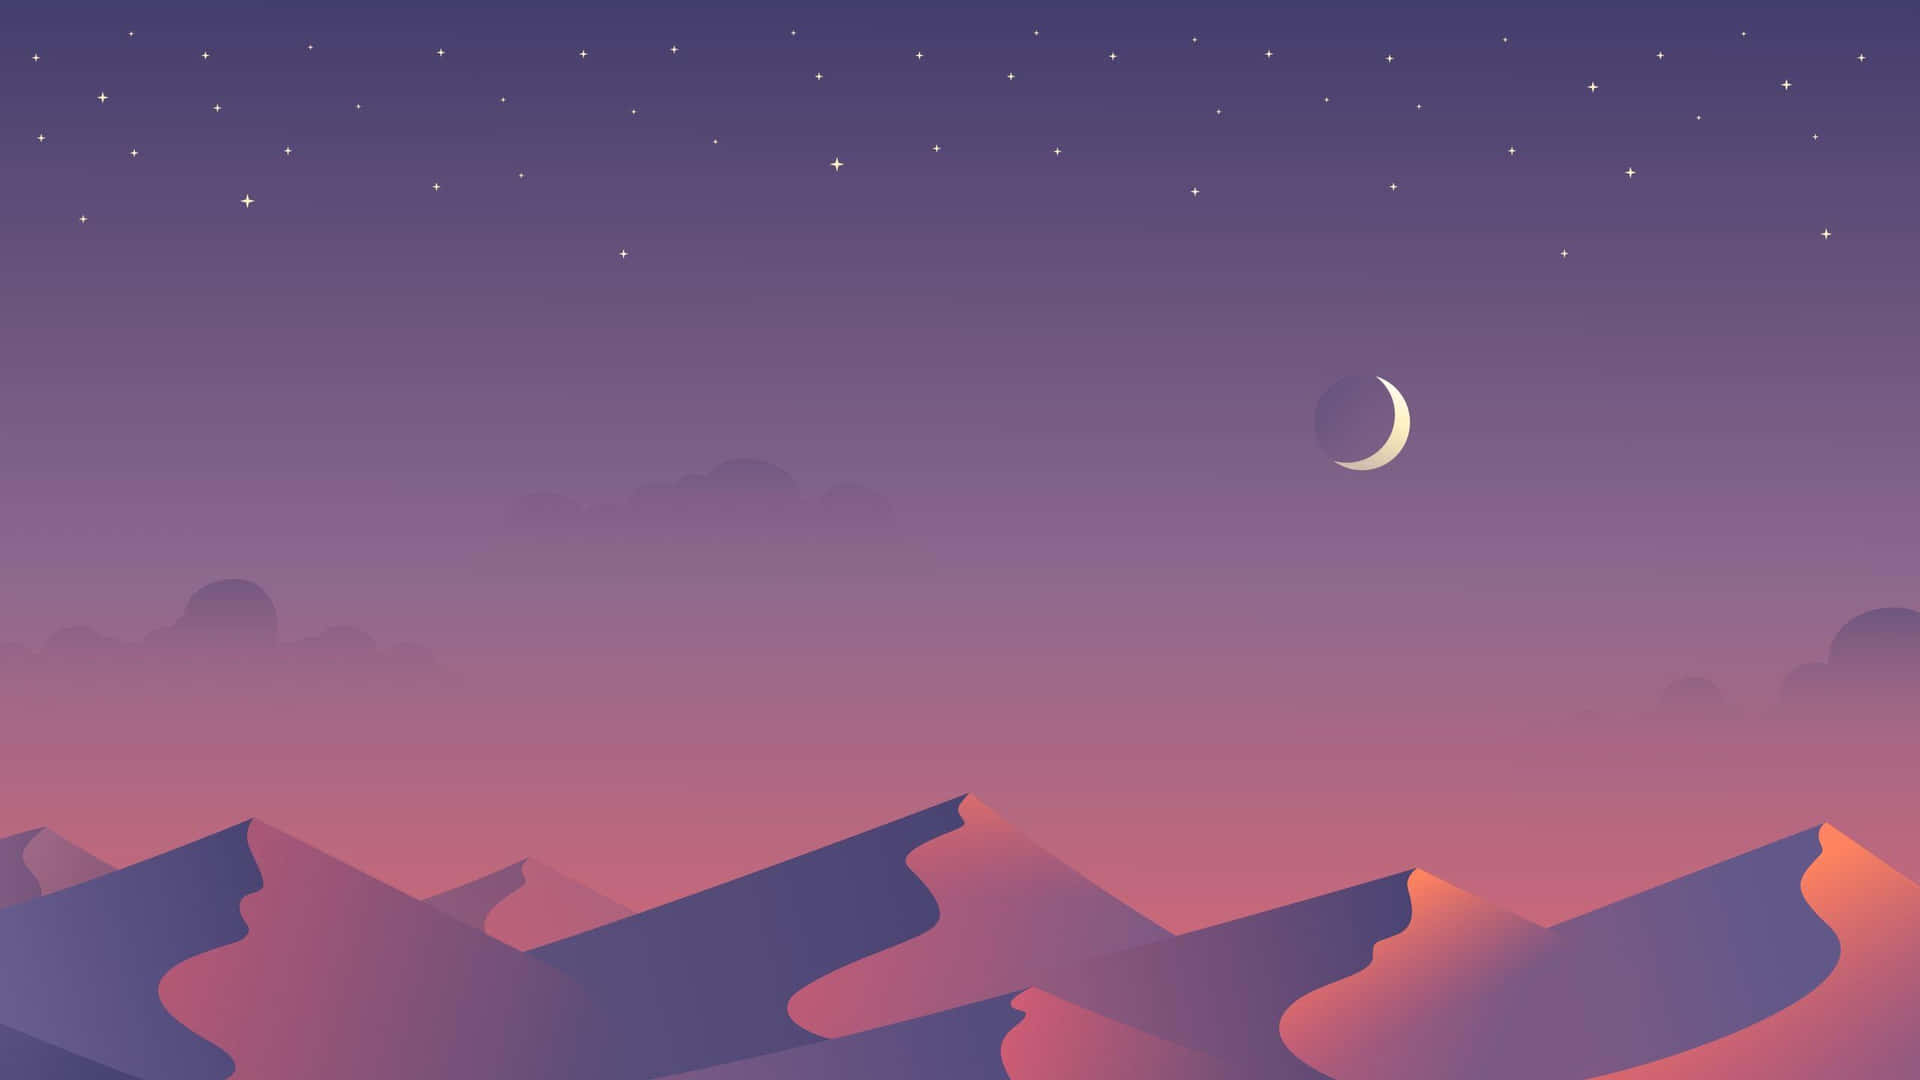 Live Aesthetic Desert Night Moon Landscape Picture